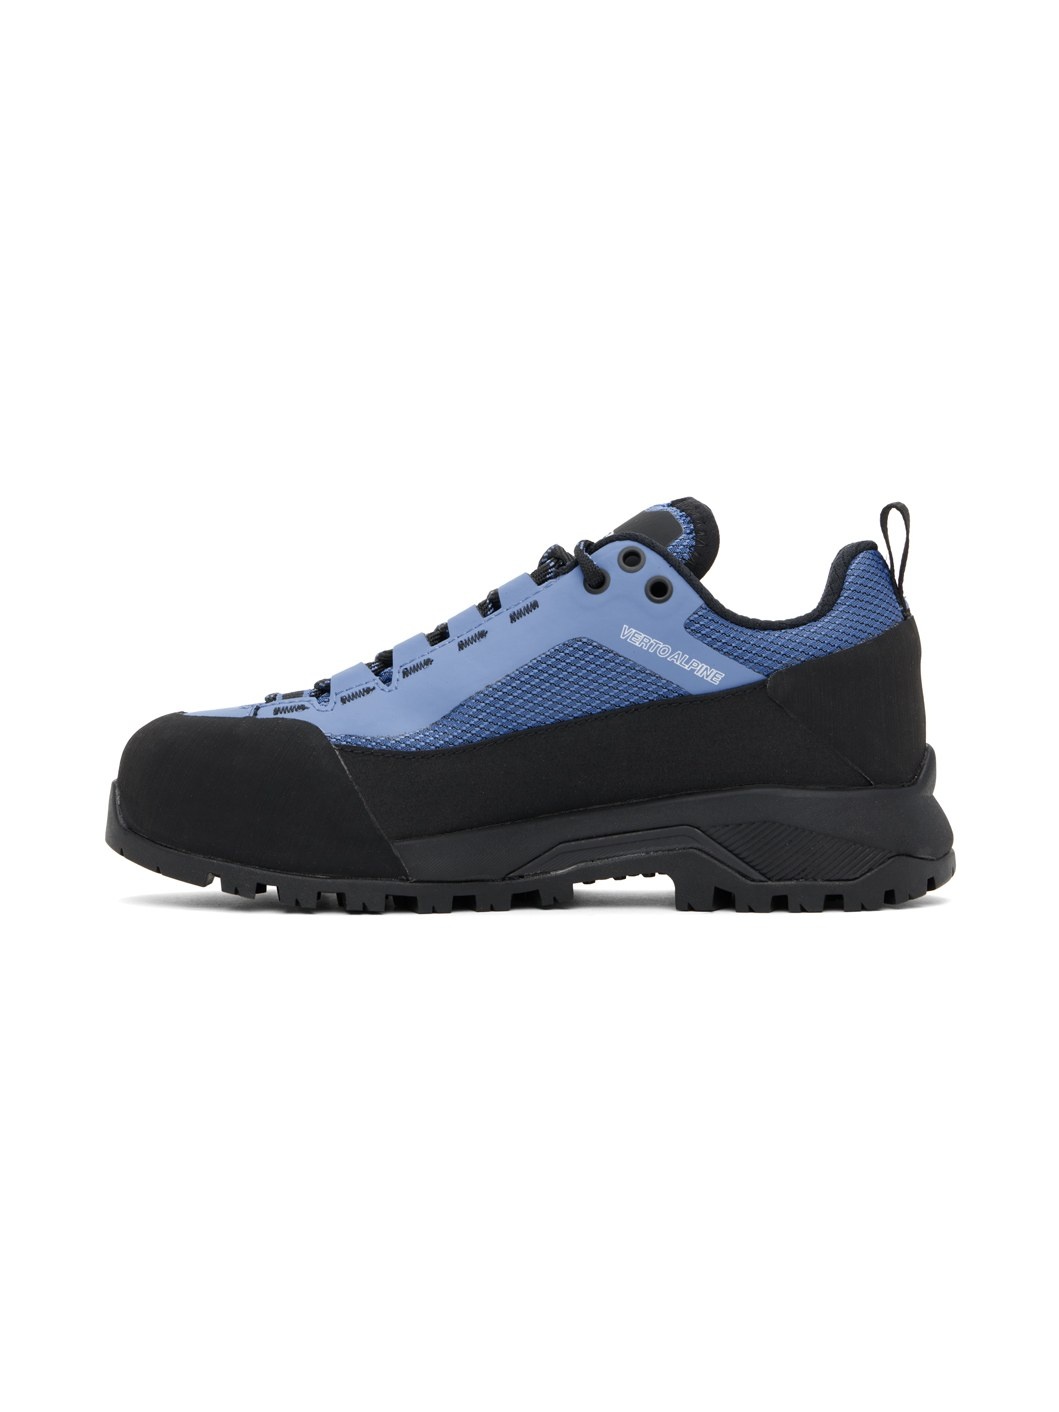 Blue & Black Verto Alpine GORE-TEX Sneakers - 3